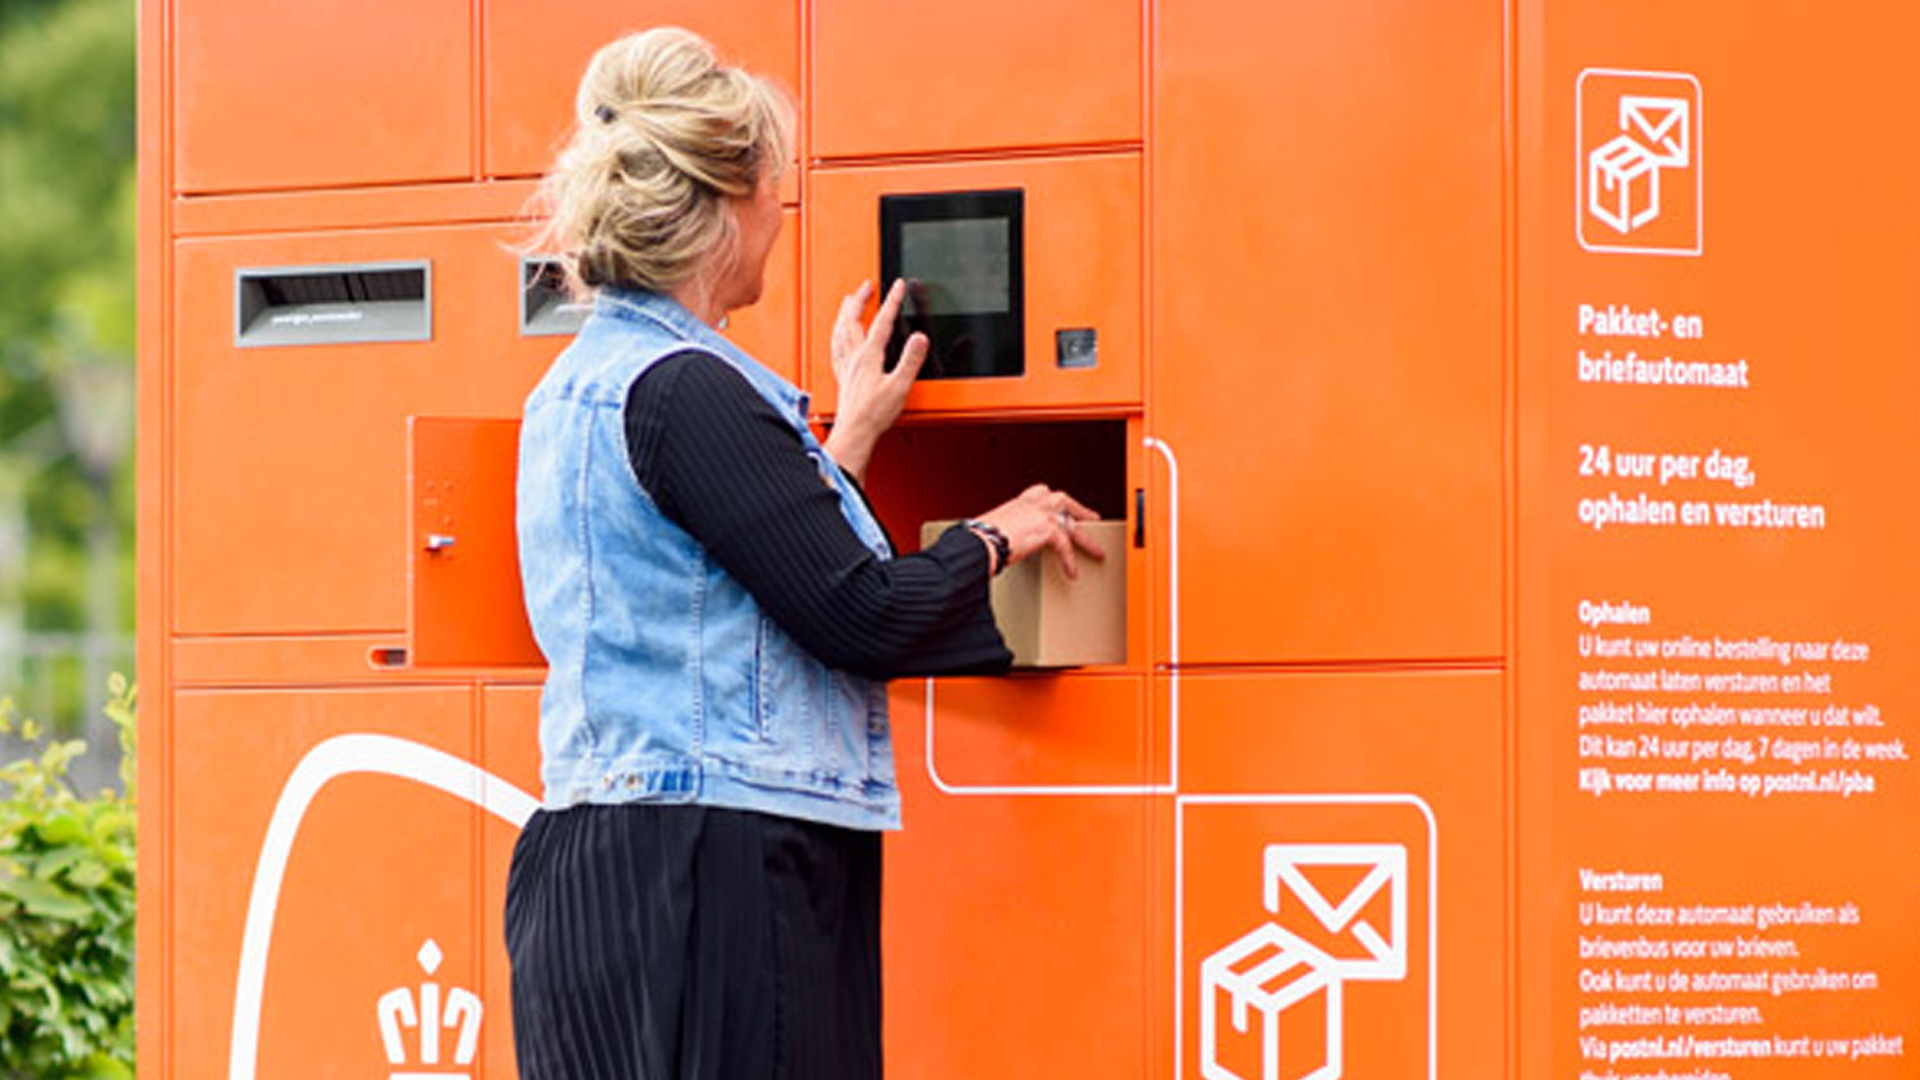 Diplomatie getuigenis Ik heb het erkend PostNL plaatst pakket- en briefautomaat bij Jumbo Stationsstraat Deurne |  Deurne Media Groep